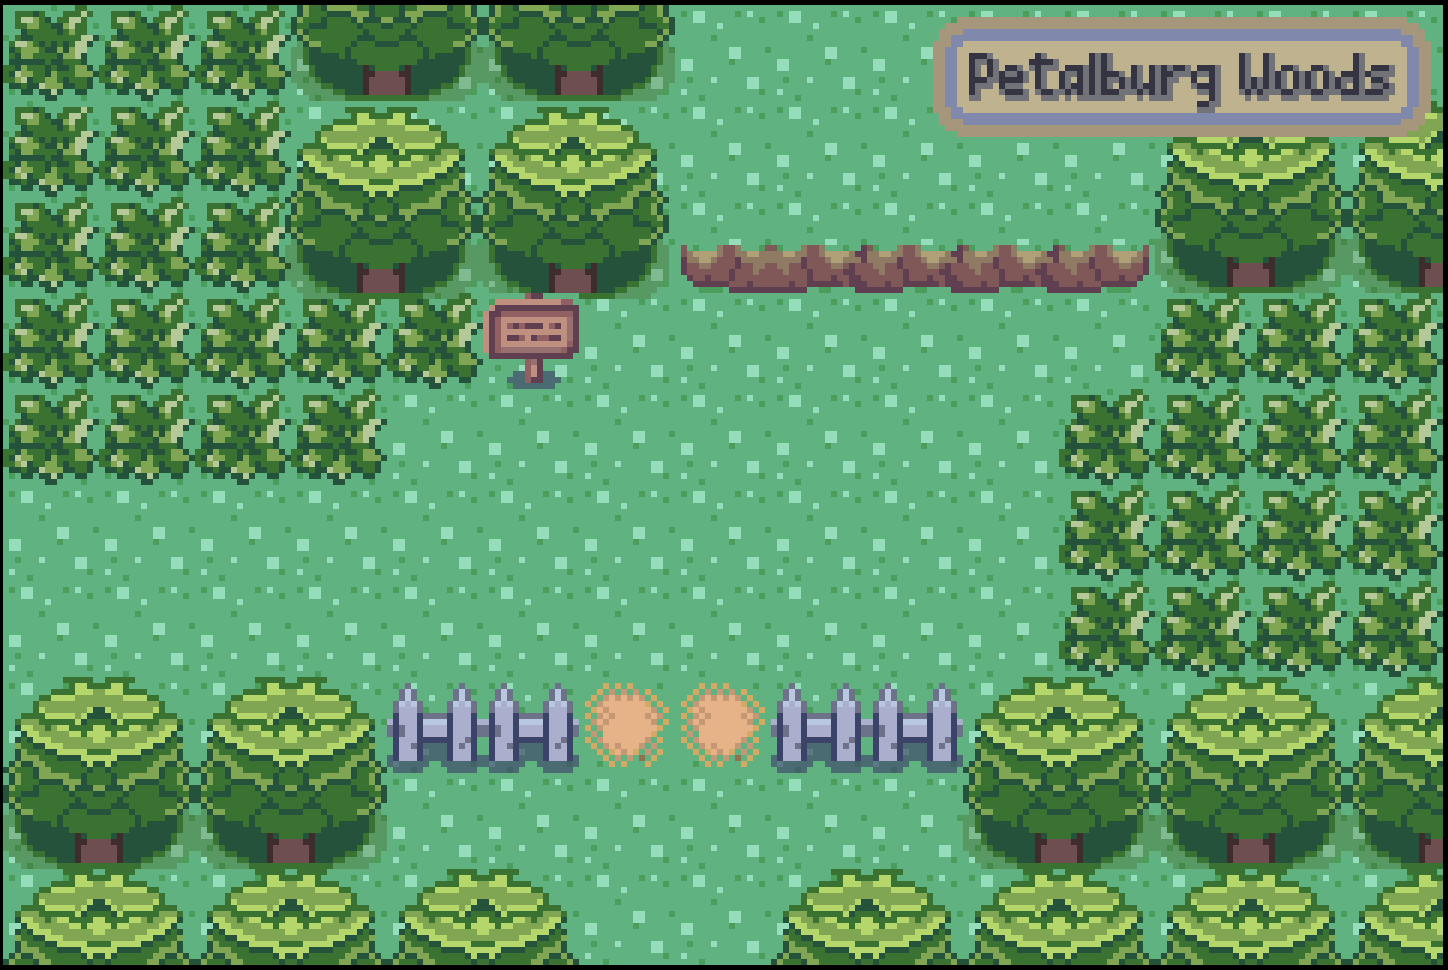 Petalburg Woods - Pokemon 3rd Gen Mockup 2 by Traslogan on DeviantArt